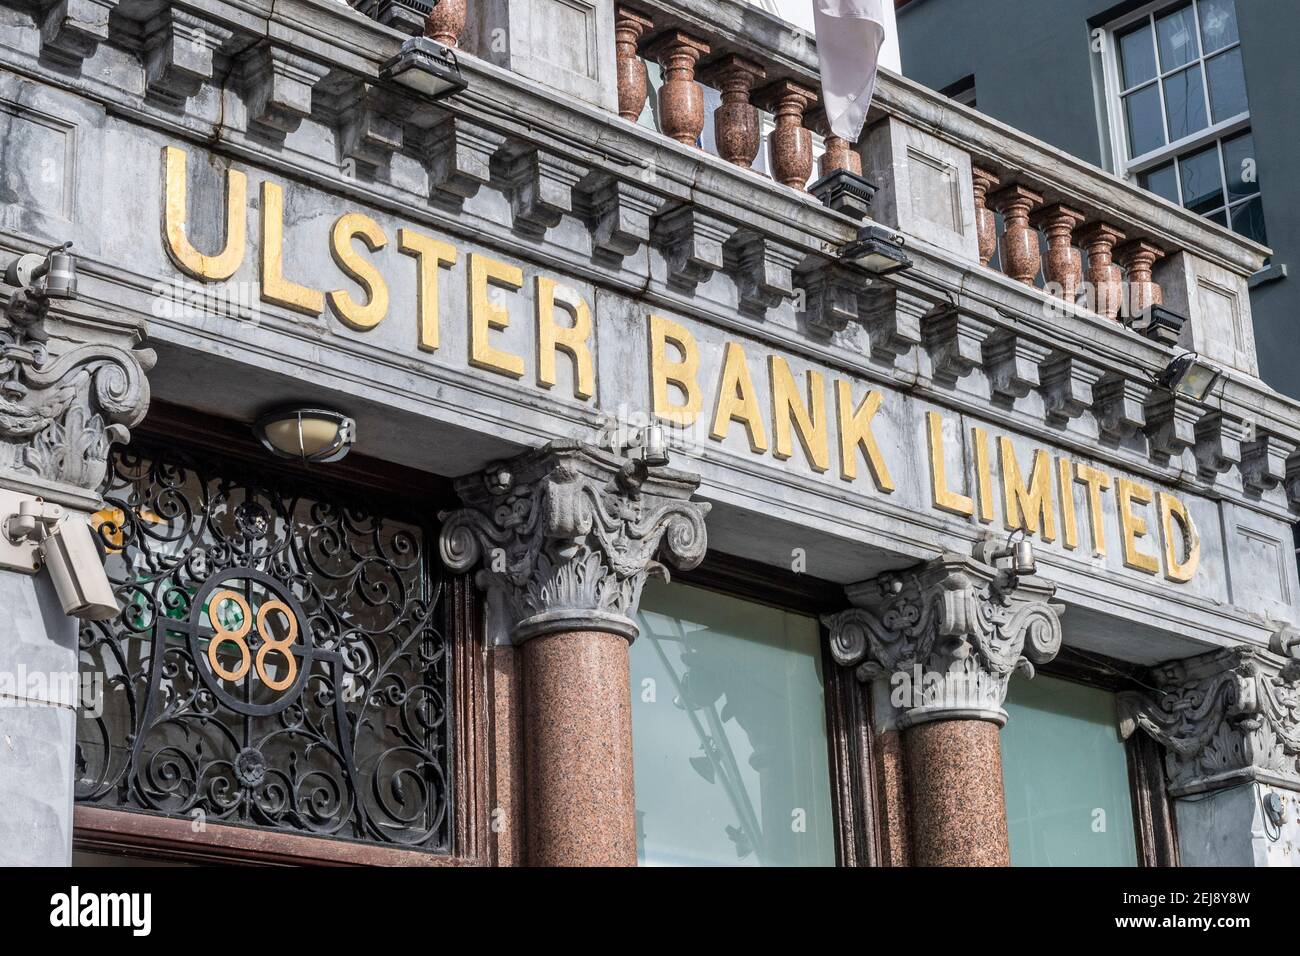 Ulster Bank branch exterior in Patrick Street, Cork, Ireland. Stock Photo